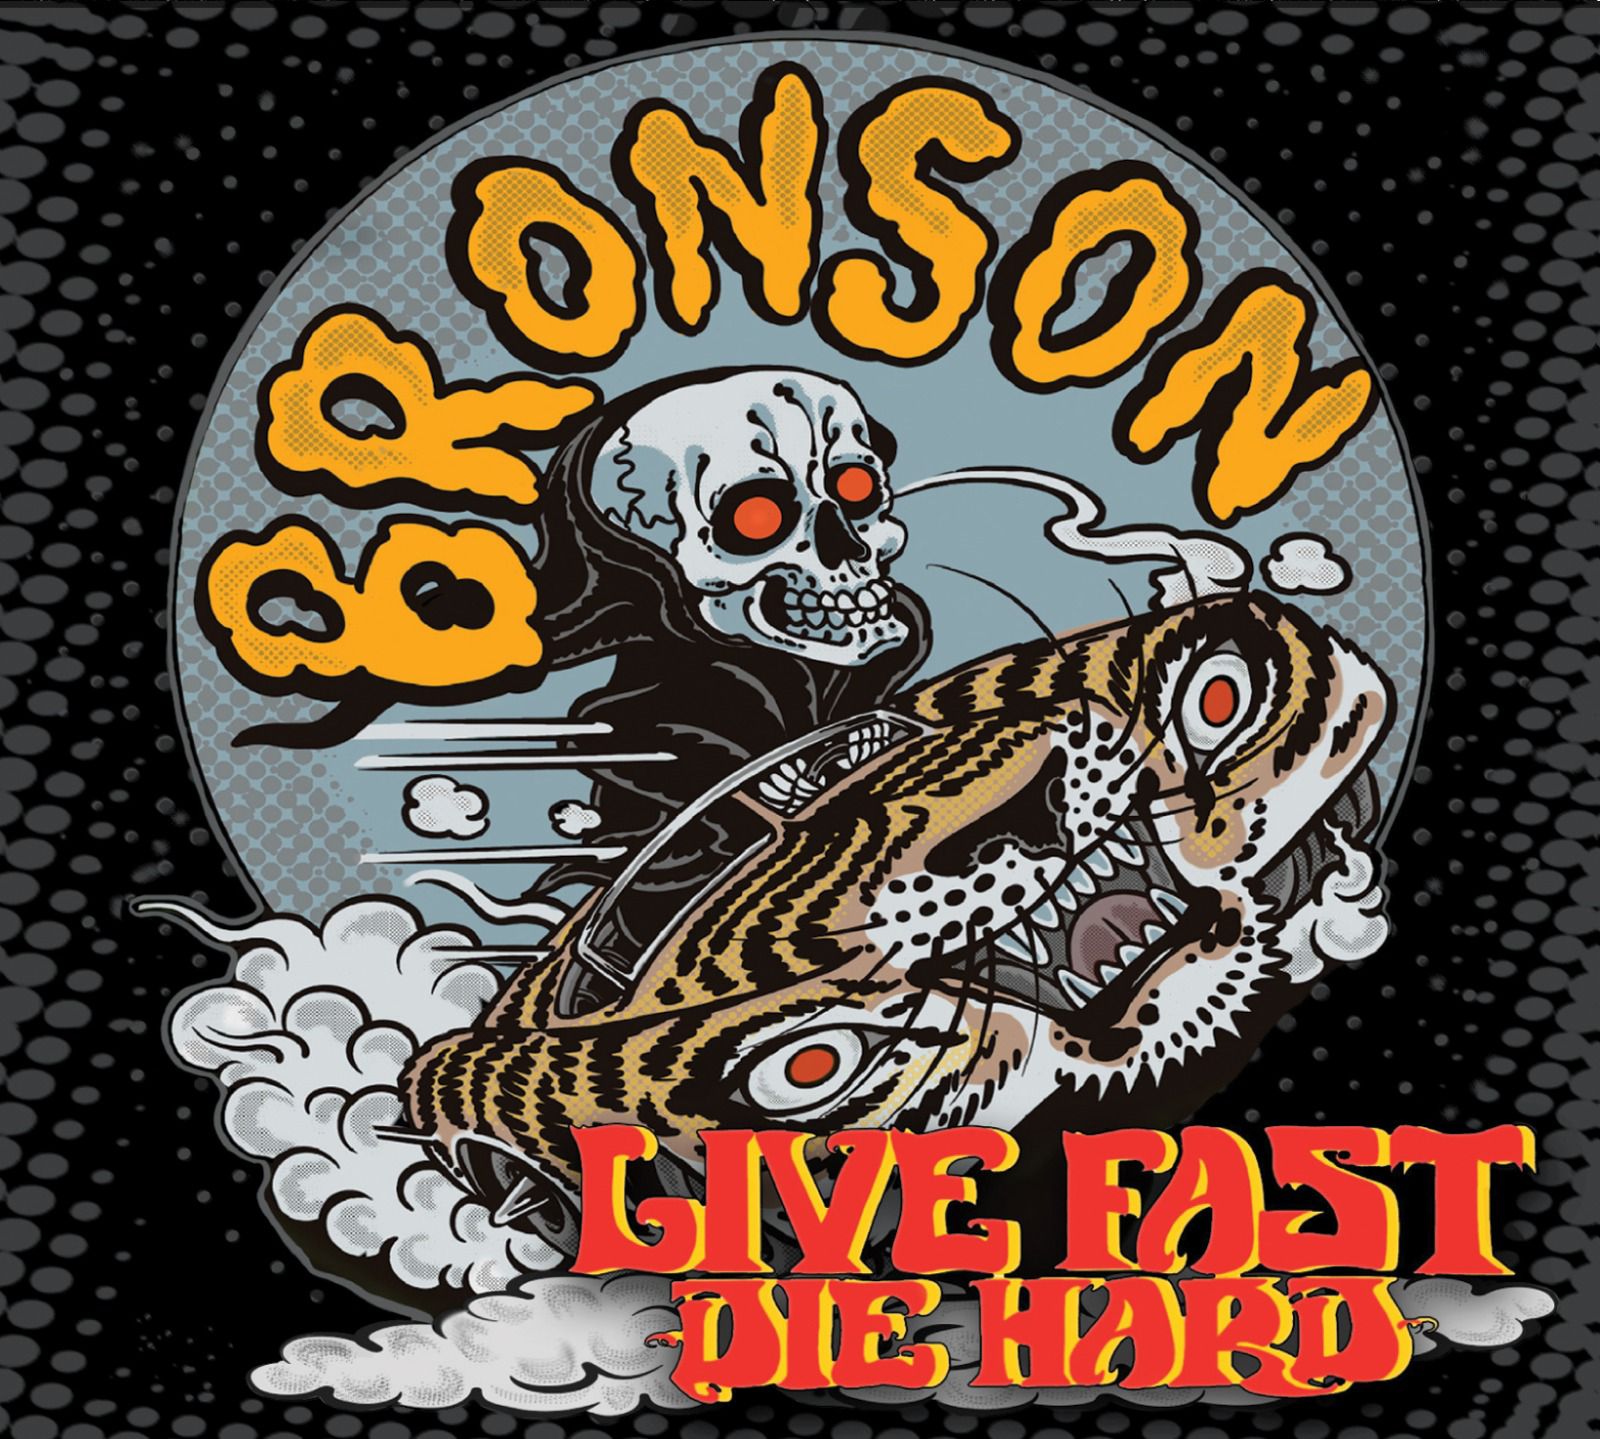 Bronson – Live fast die hard